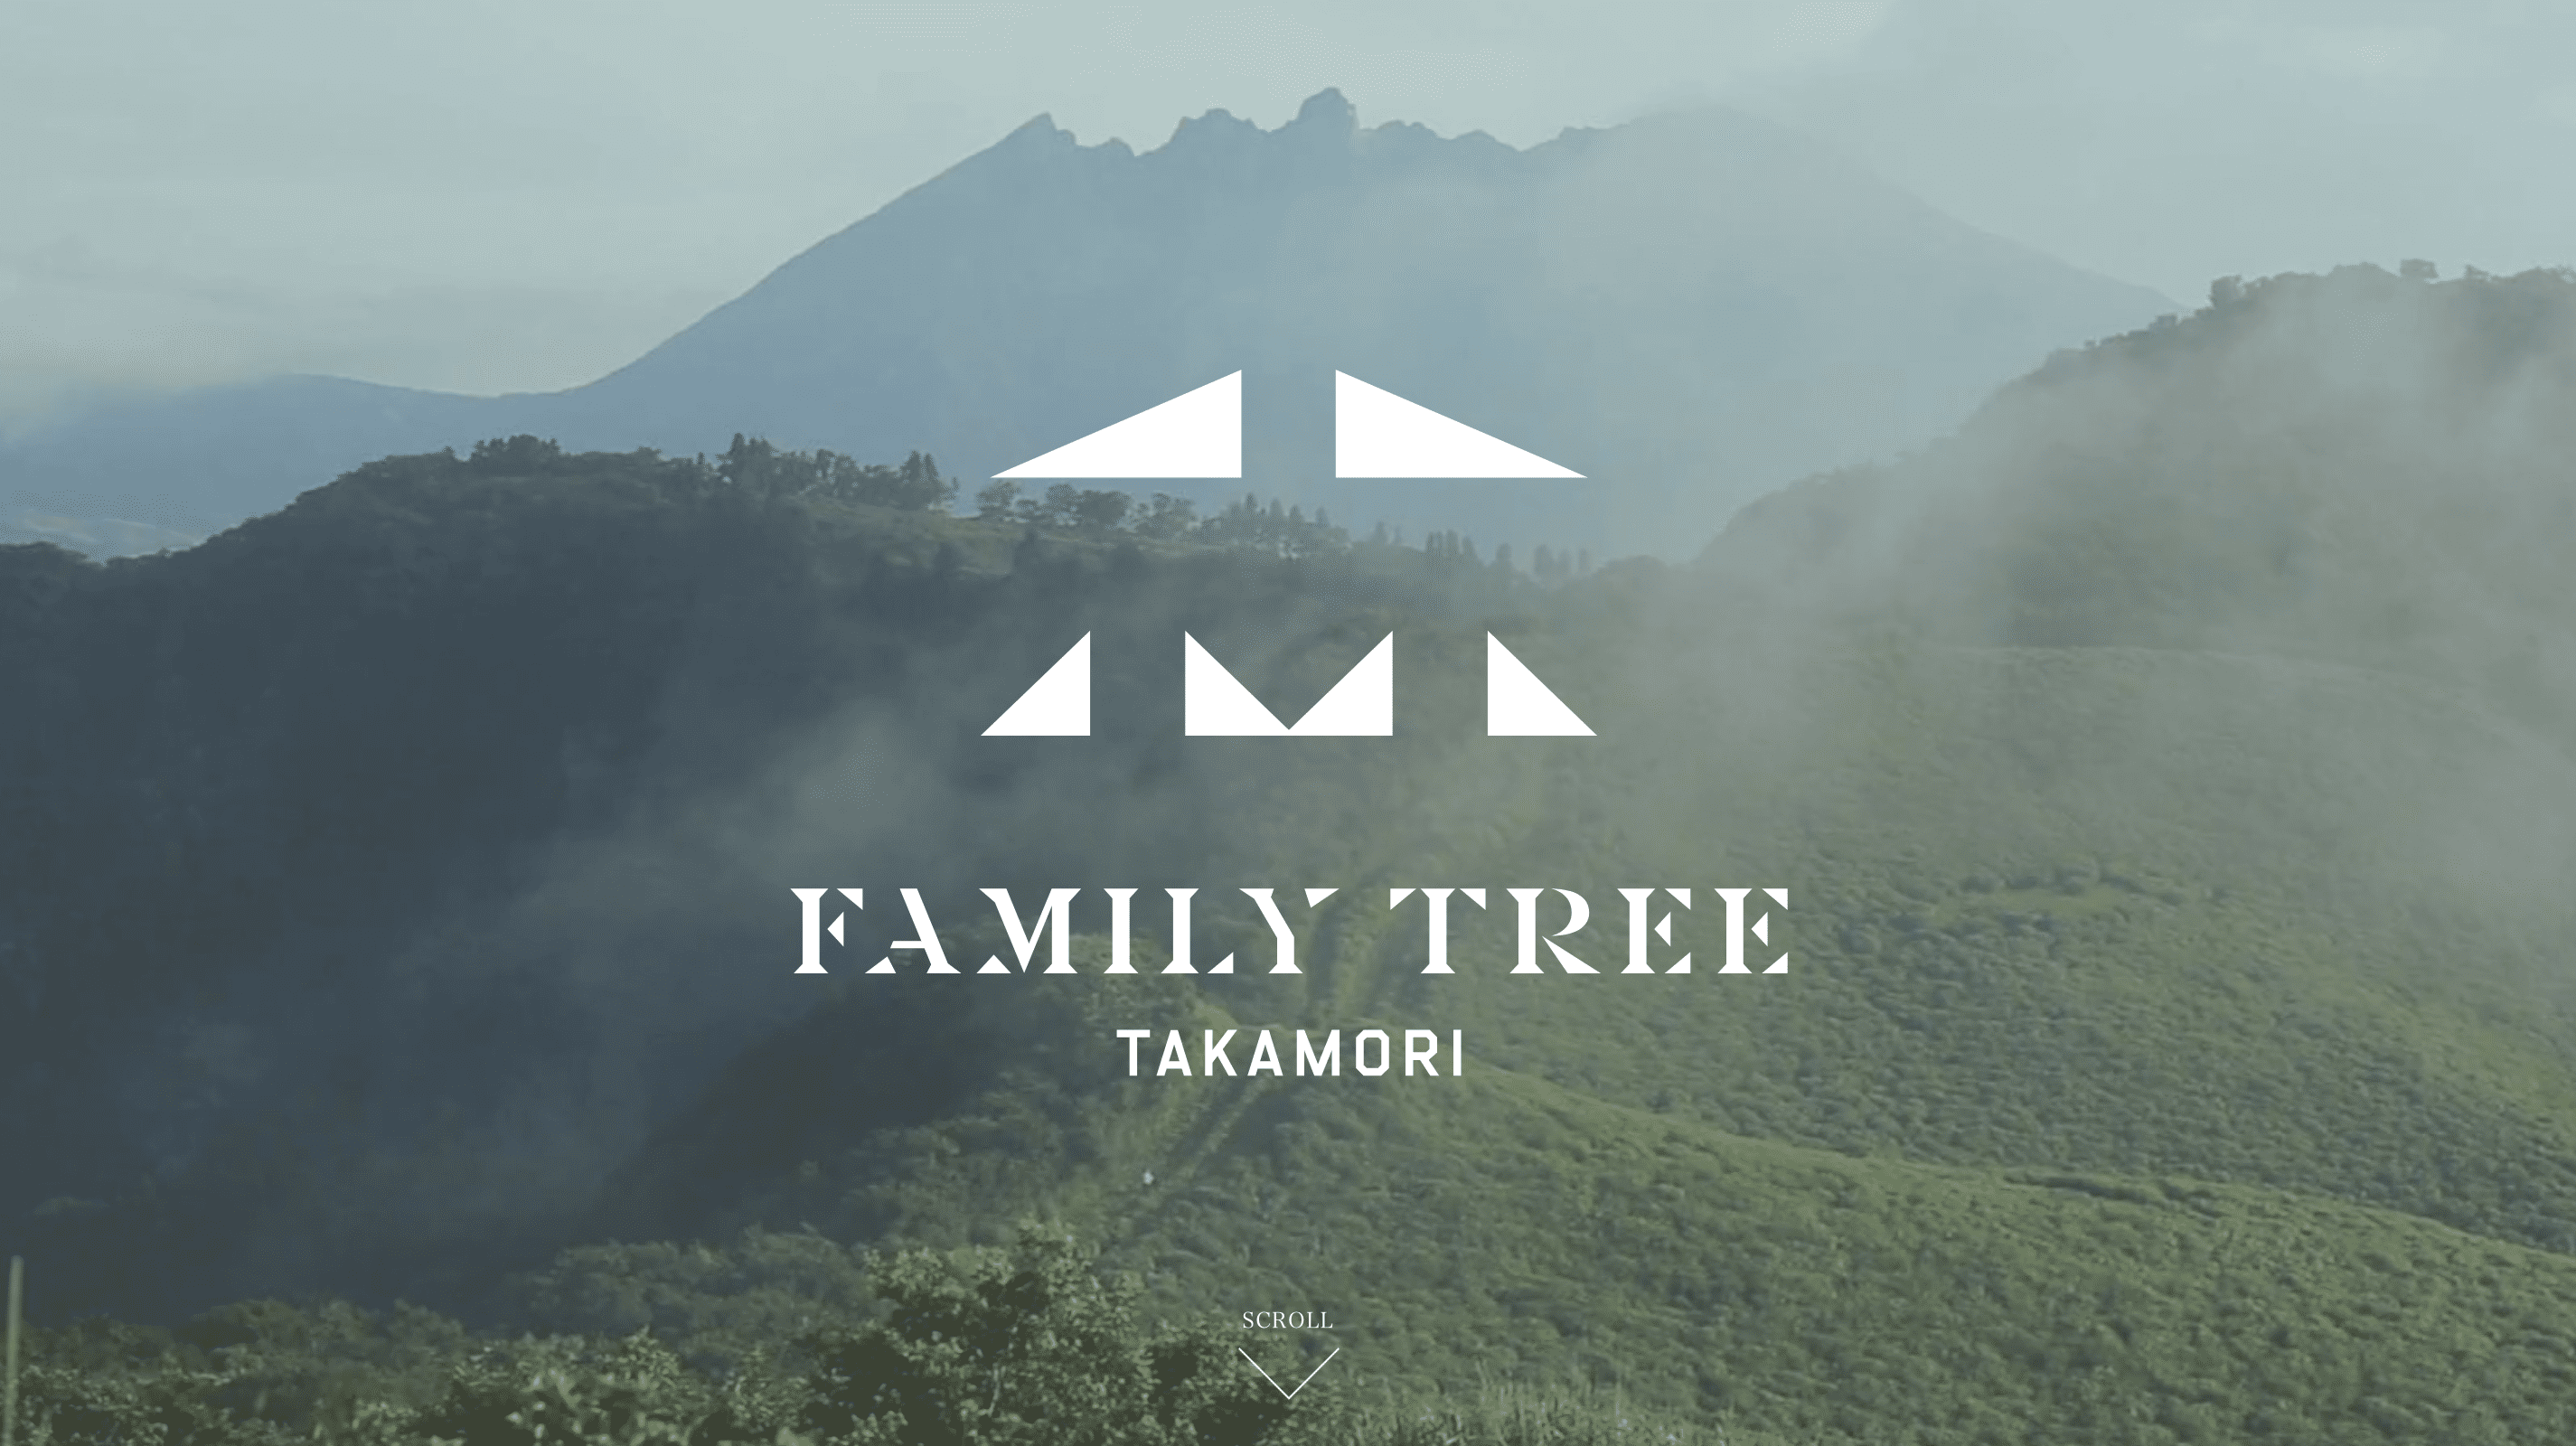 FAMILY TREE TAKAMORIサイトのパソコン表示